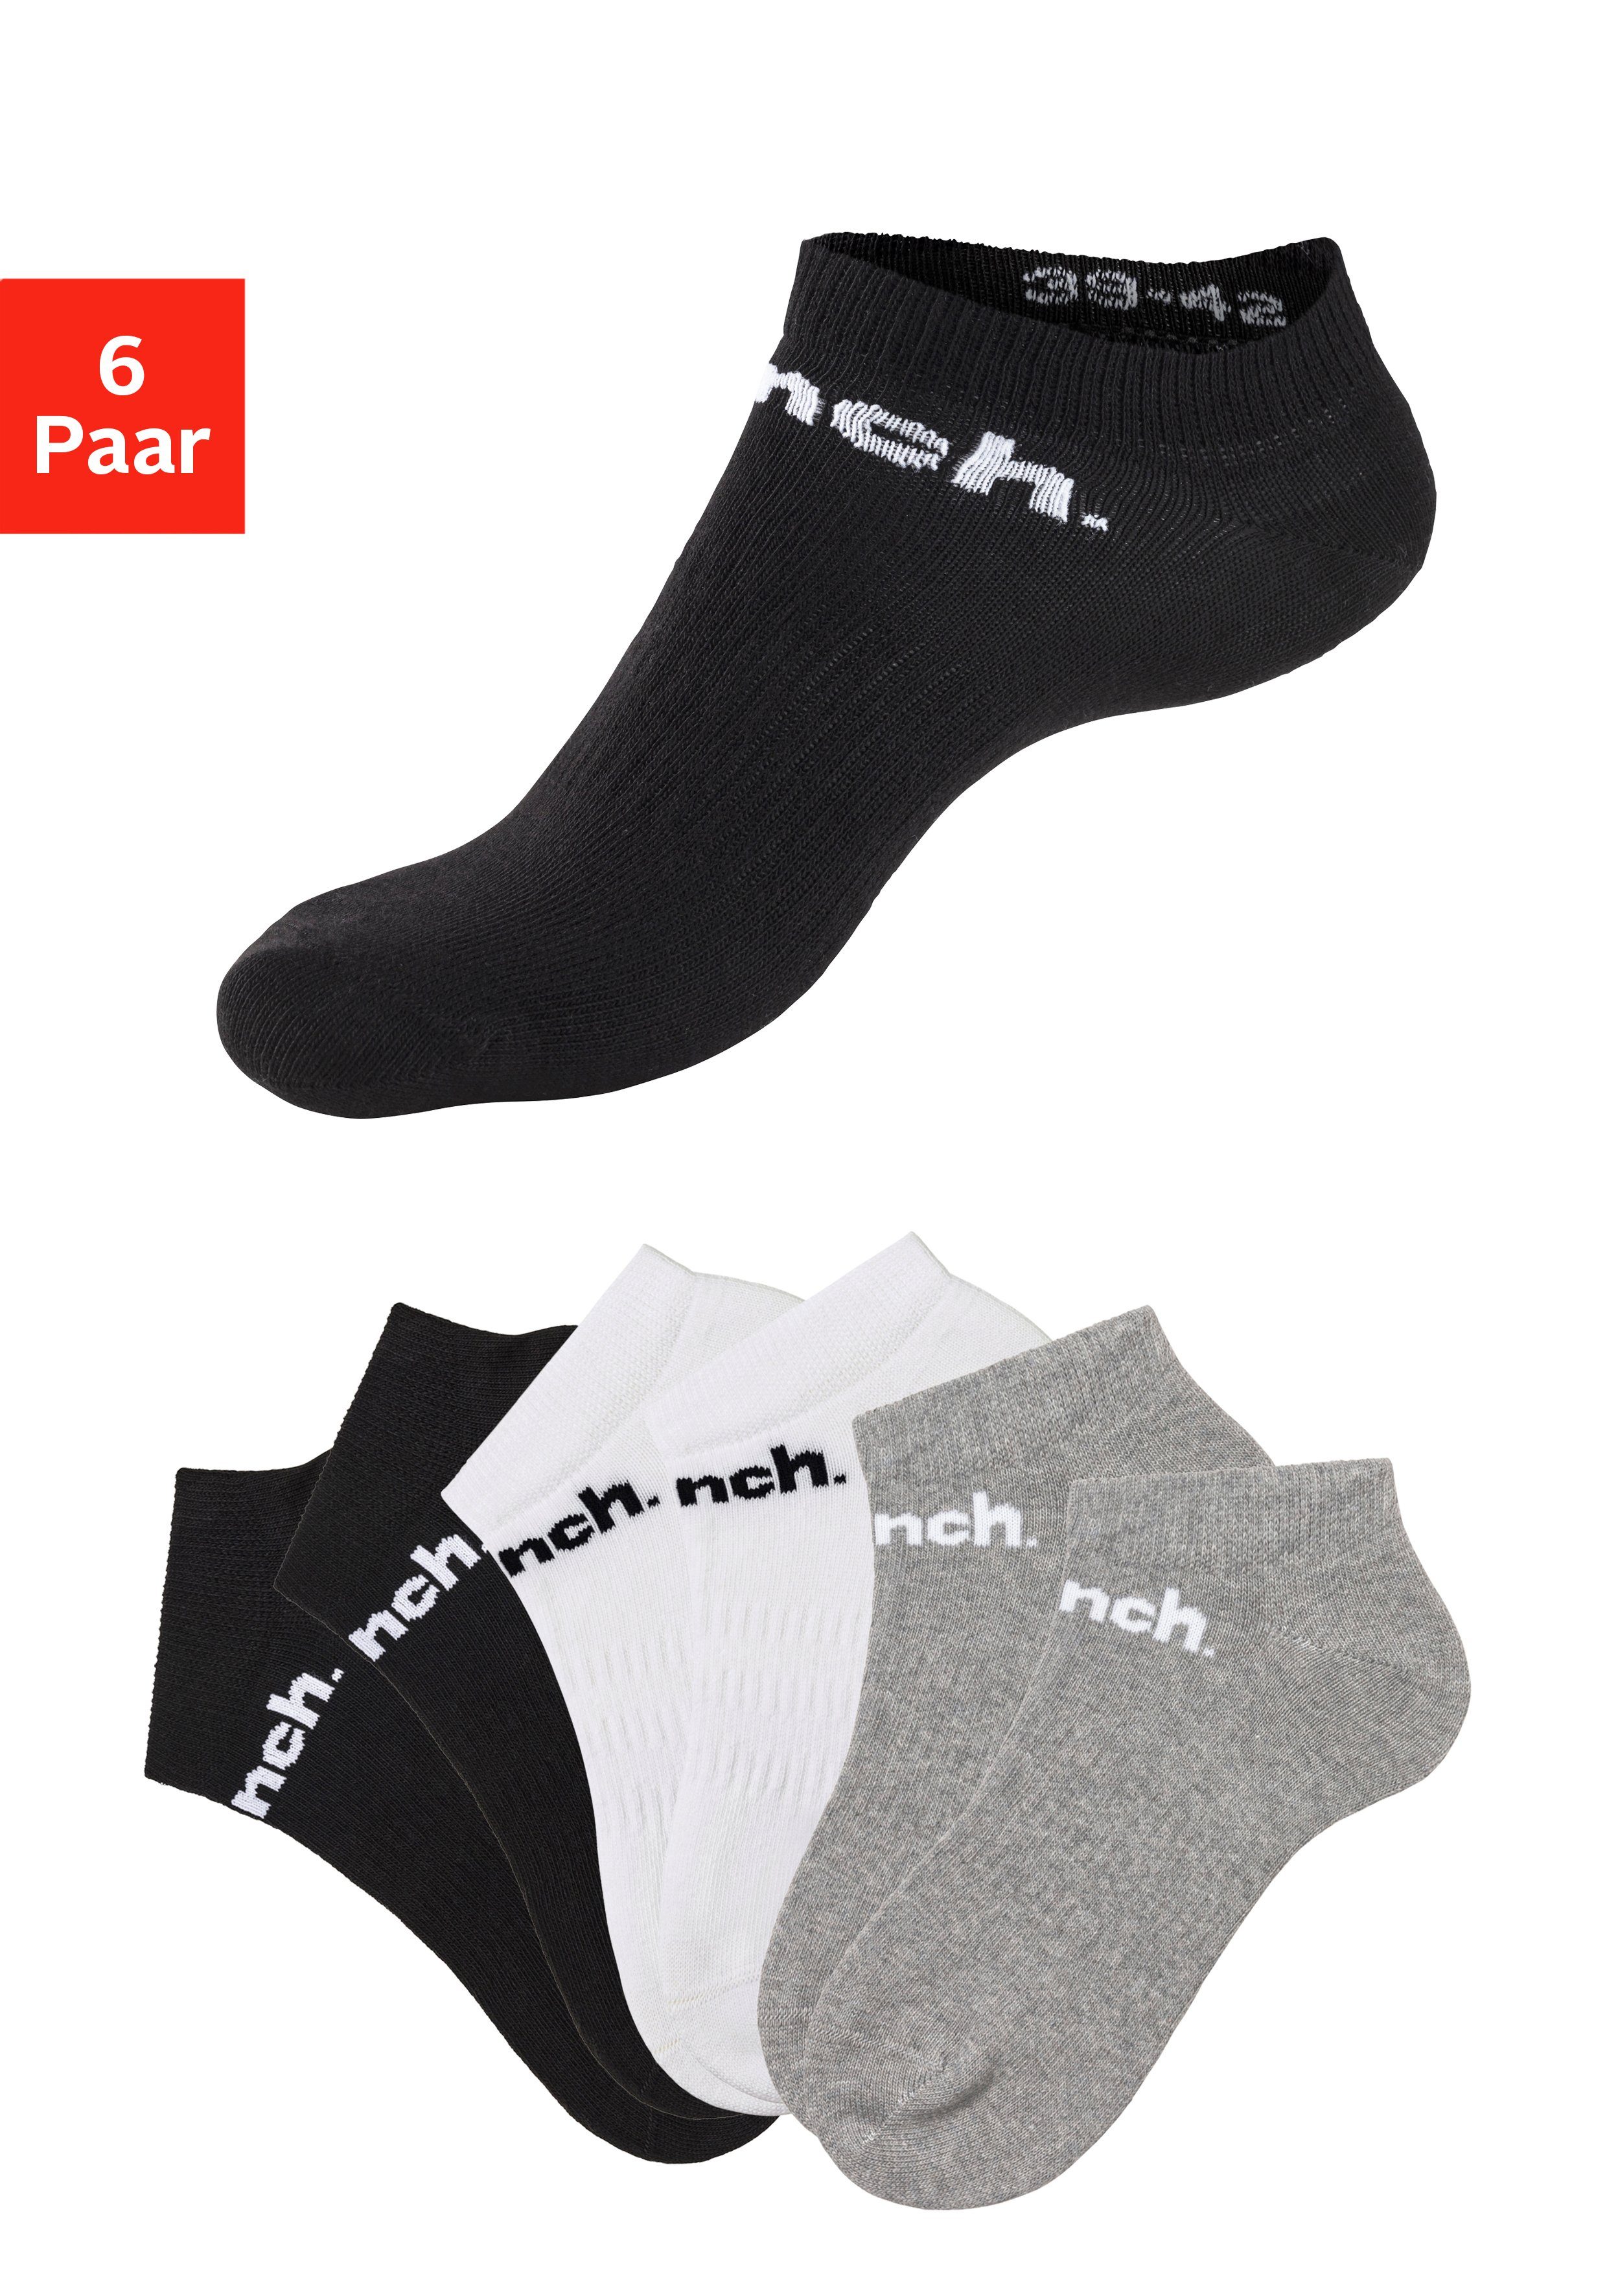 Bench. Sportsocken (Set, 6-Paar) Sneakersocken mit klassischem Logoschriftzug 2x schwarz, 2x weiß, 2x grau-meliert